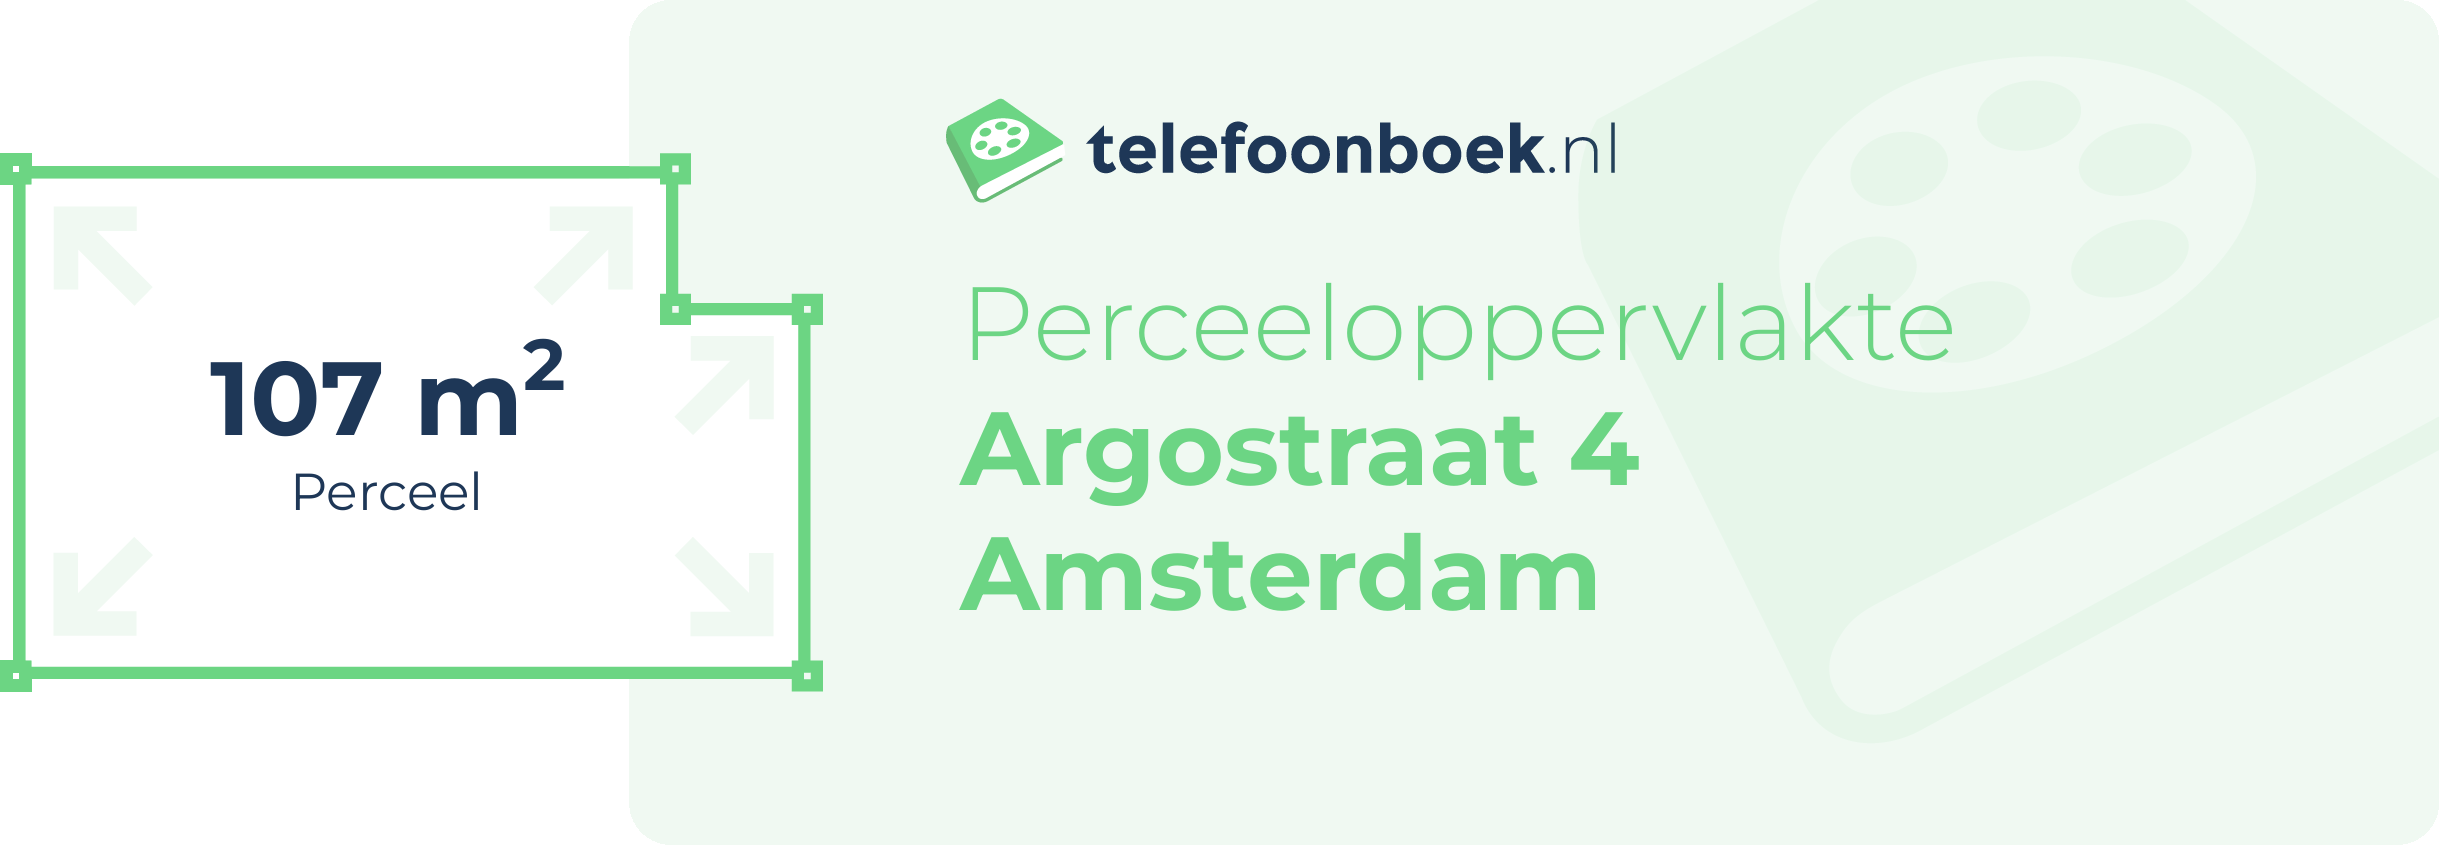 Perceeloppervlakte Argostraat 4 Amsterdam